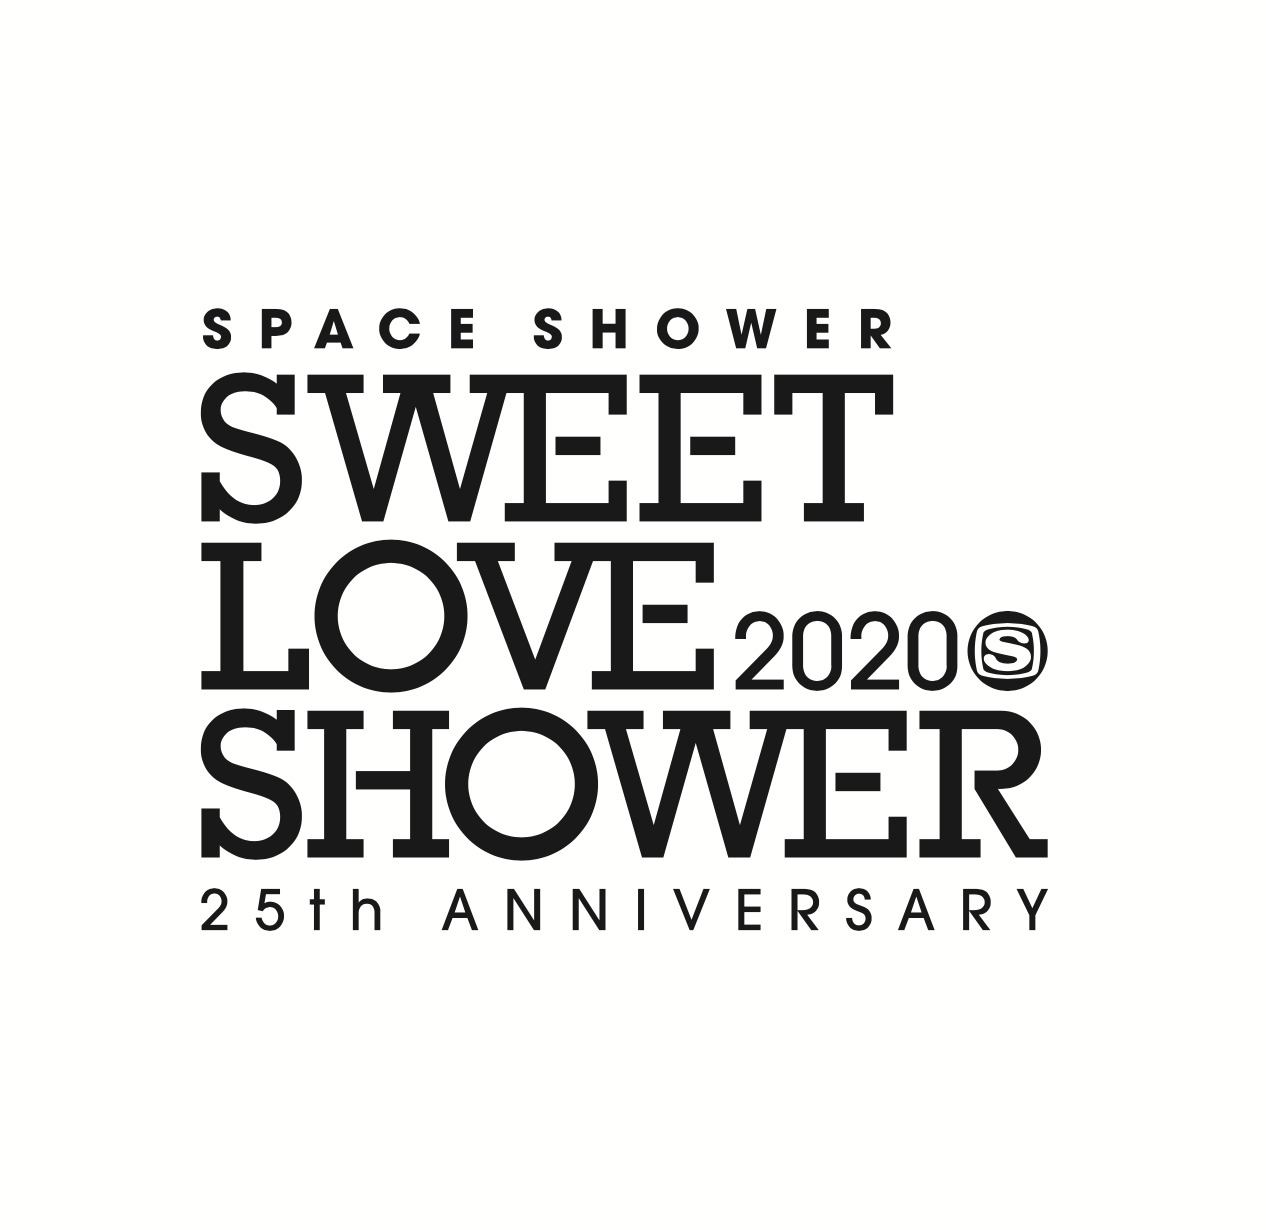 SPACE SHOWER SWEET LOVE SHOWER 2020 -25th ANNIVERSARY-